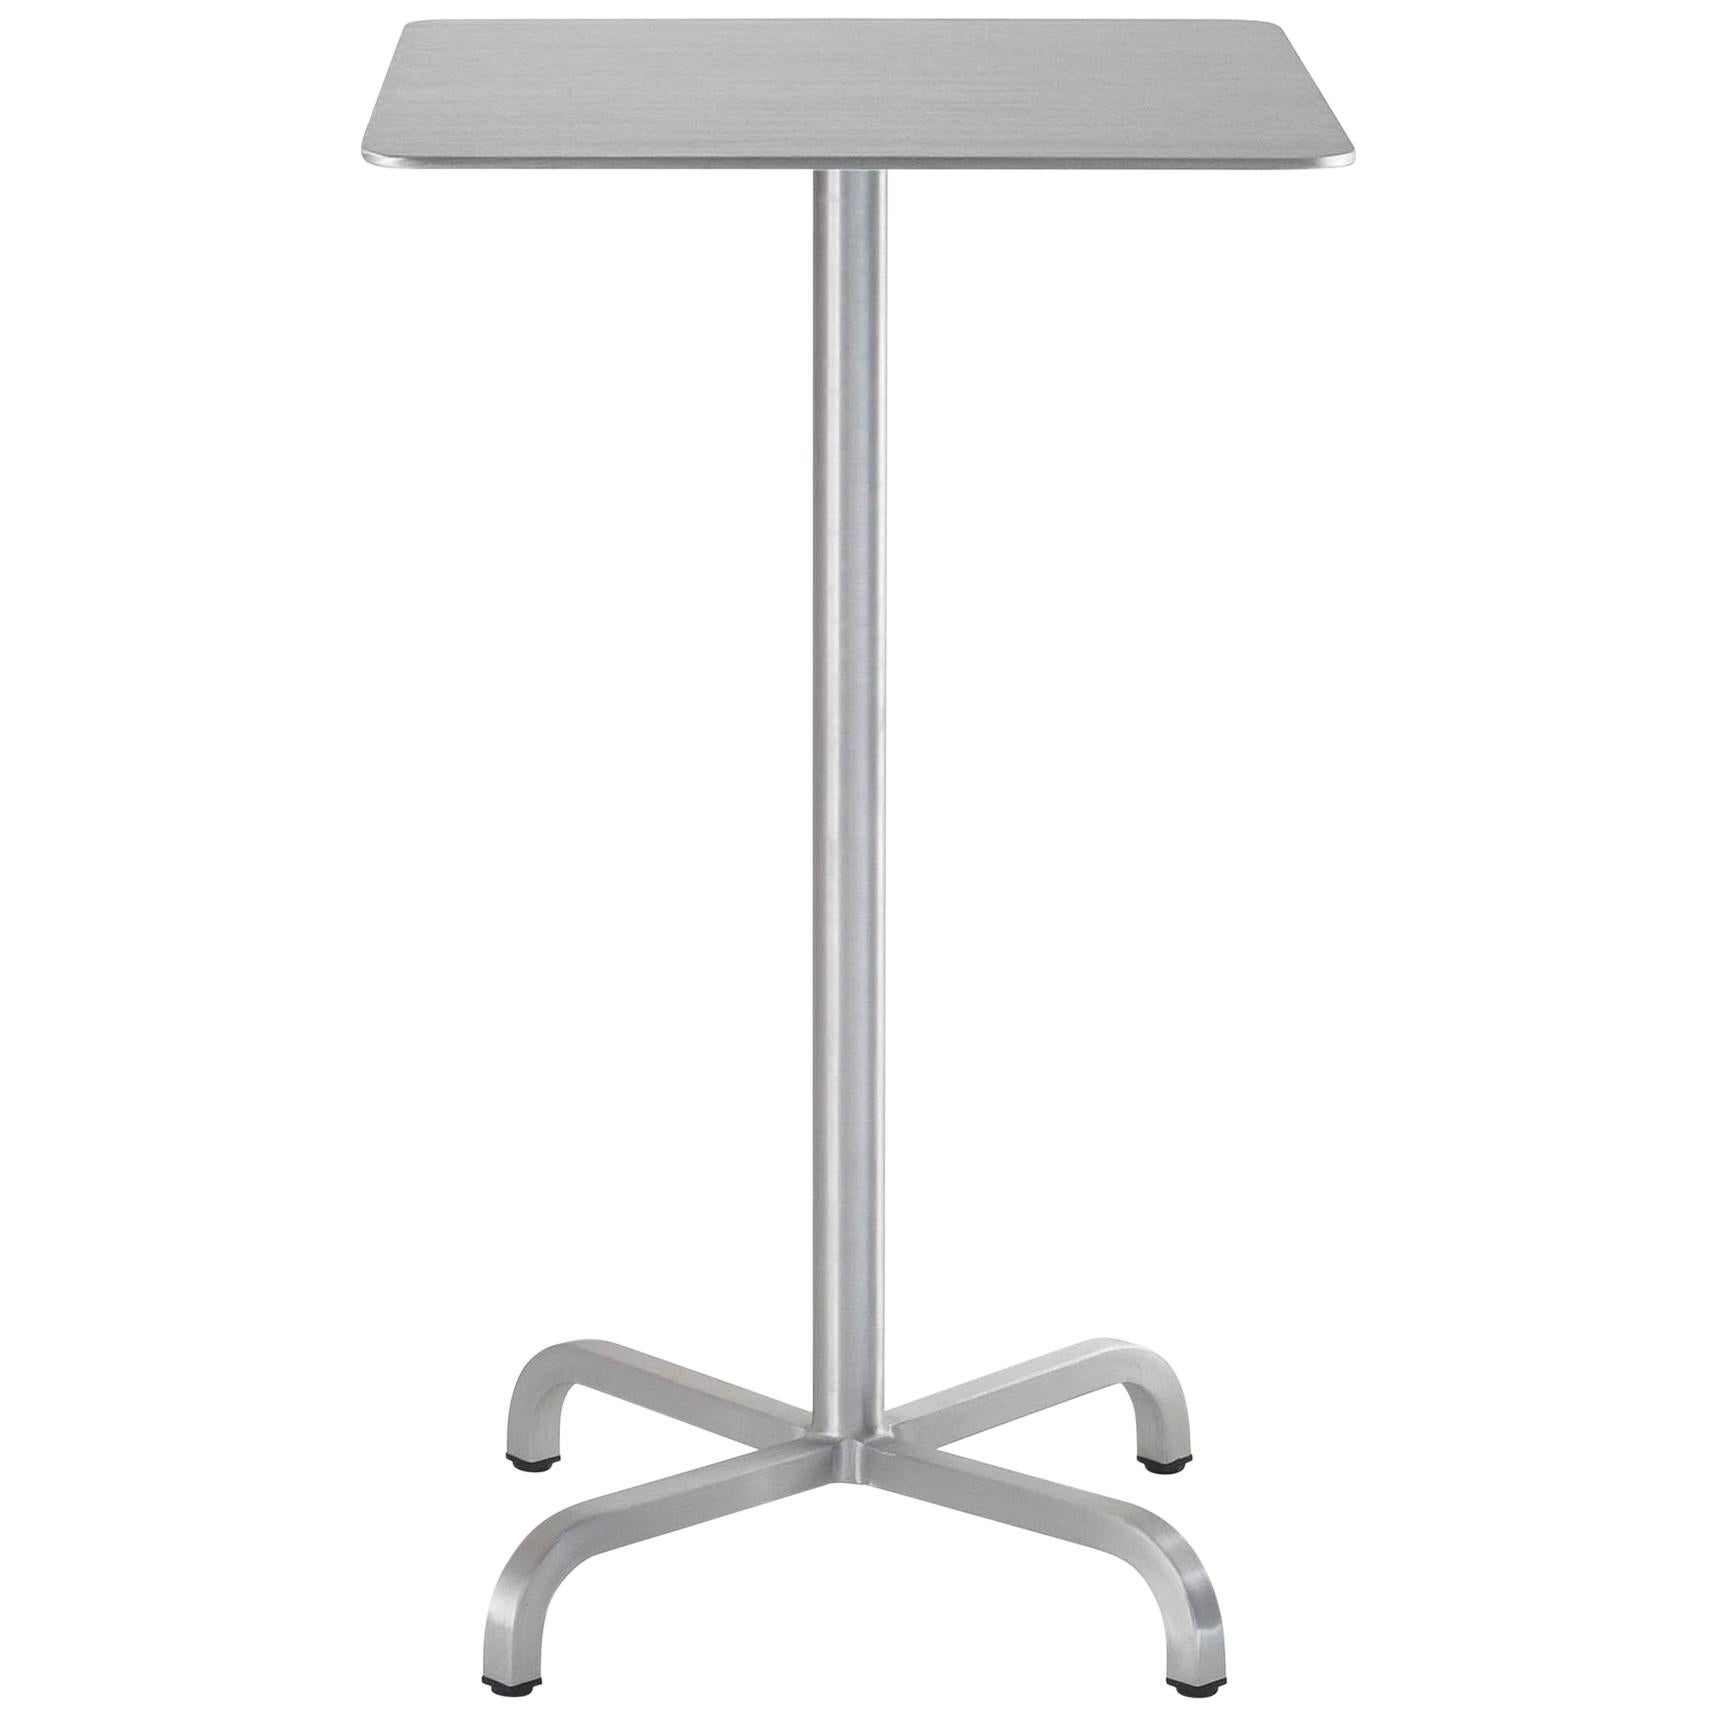 Petite table de bar carrée Emeco 20-06 en aluminium brossé de Norman Foster 